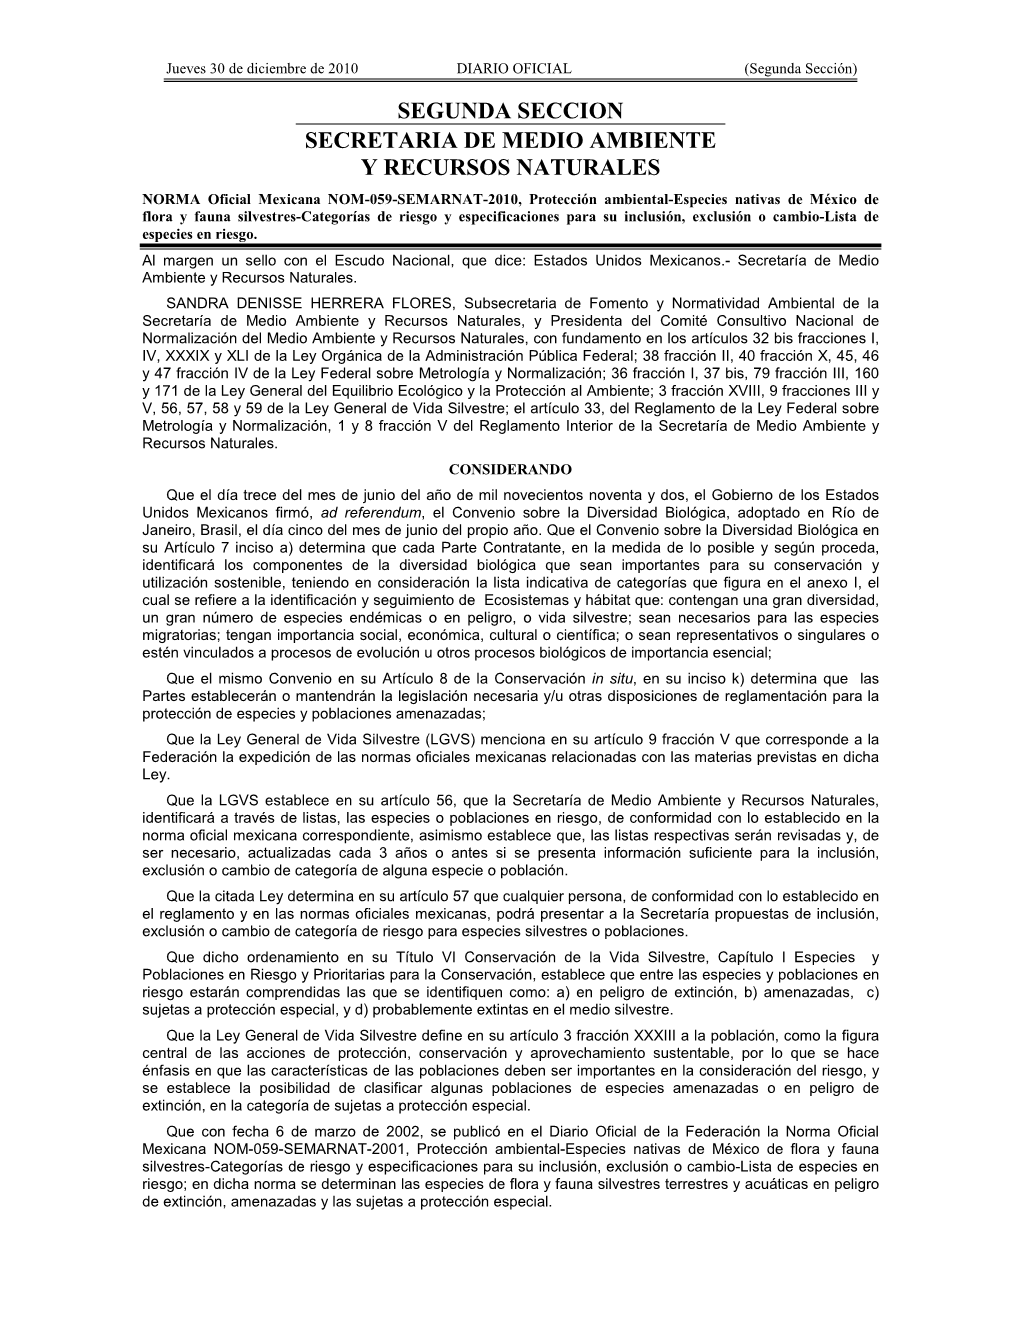 NORMA Oficial Mexicana NOM-059-SEMARNAT-2010